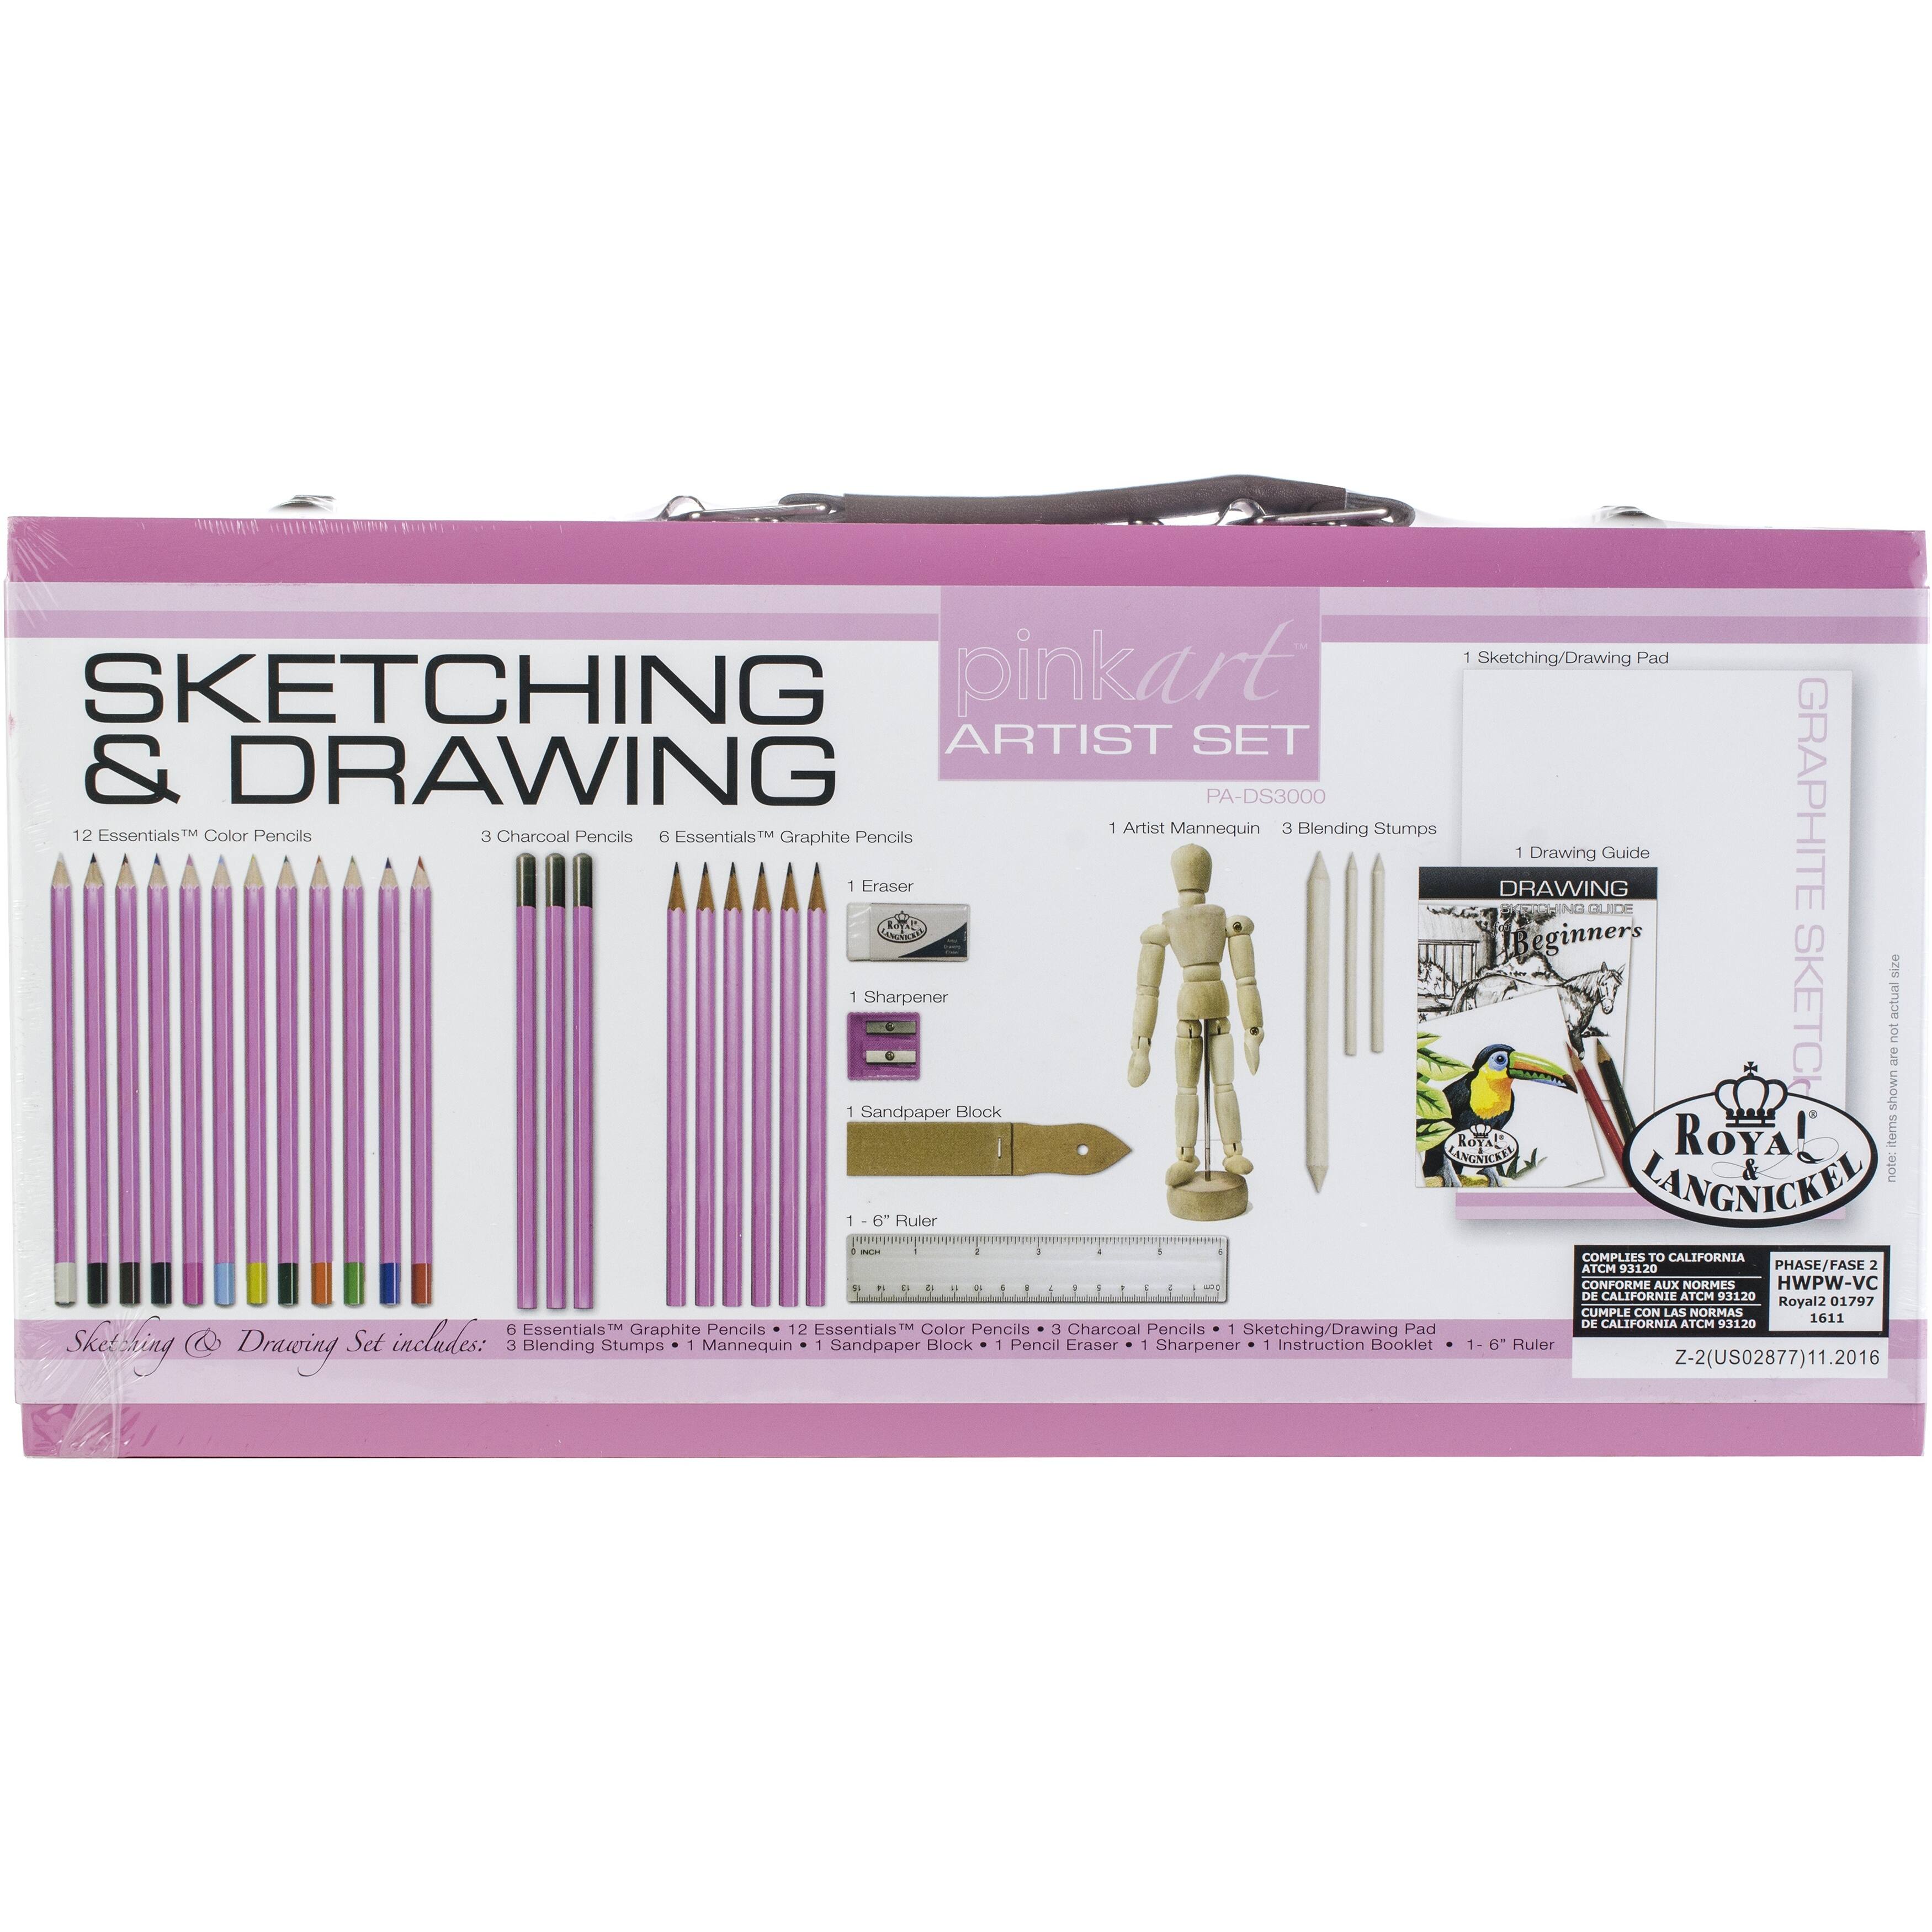 Royal & Langnickel Pink Art Artist Set for Beginners-Sketching Drawing